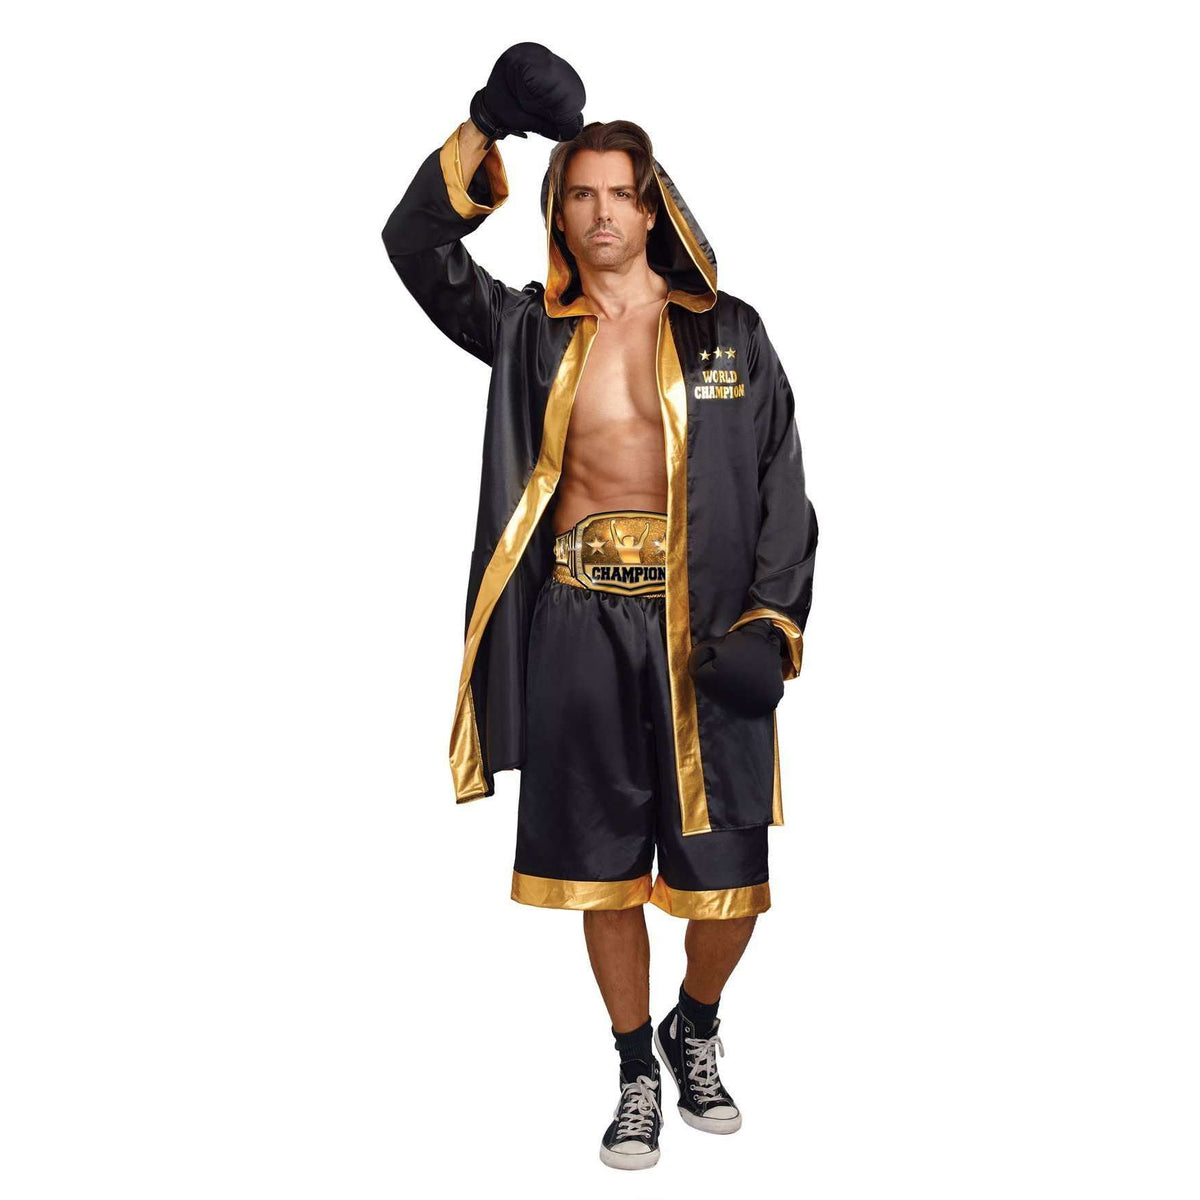 Men's World Boxing Champion Adult Costume